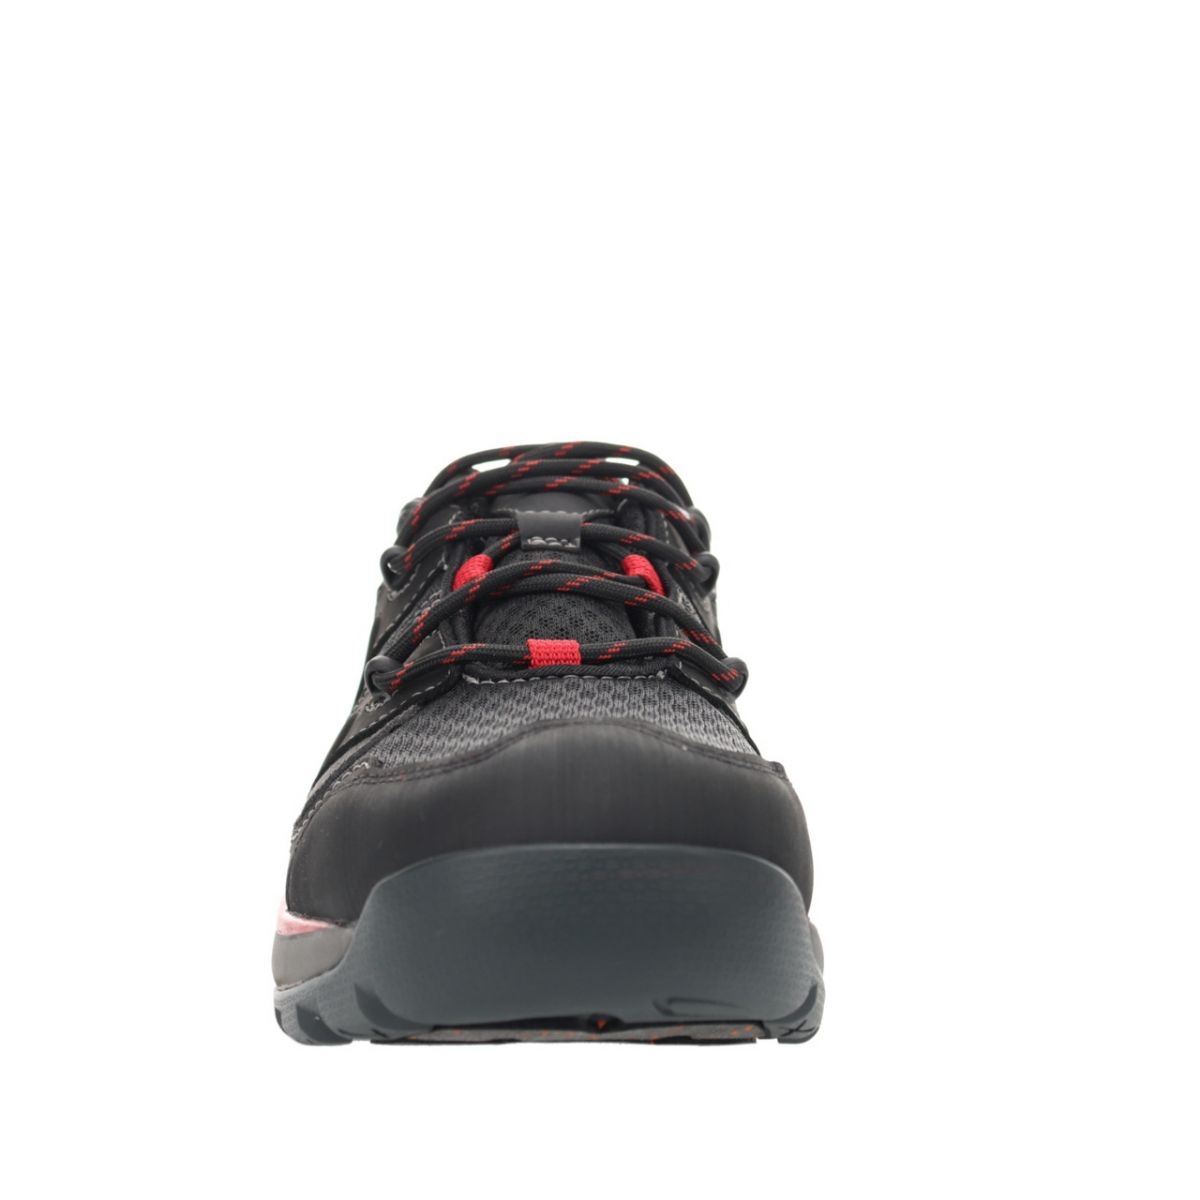 Propet Men's Vercors Hiking Shoe Black/Red - MOA002SBRD BLACK/RED - BLACK/RED, 16 X-Wide